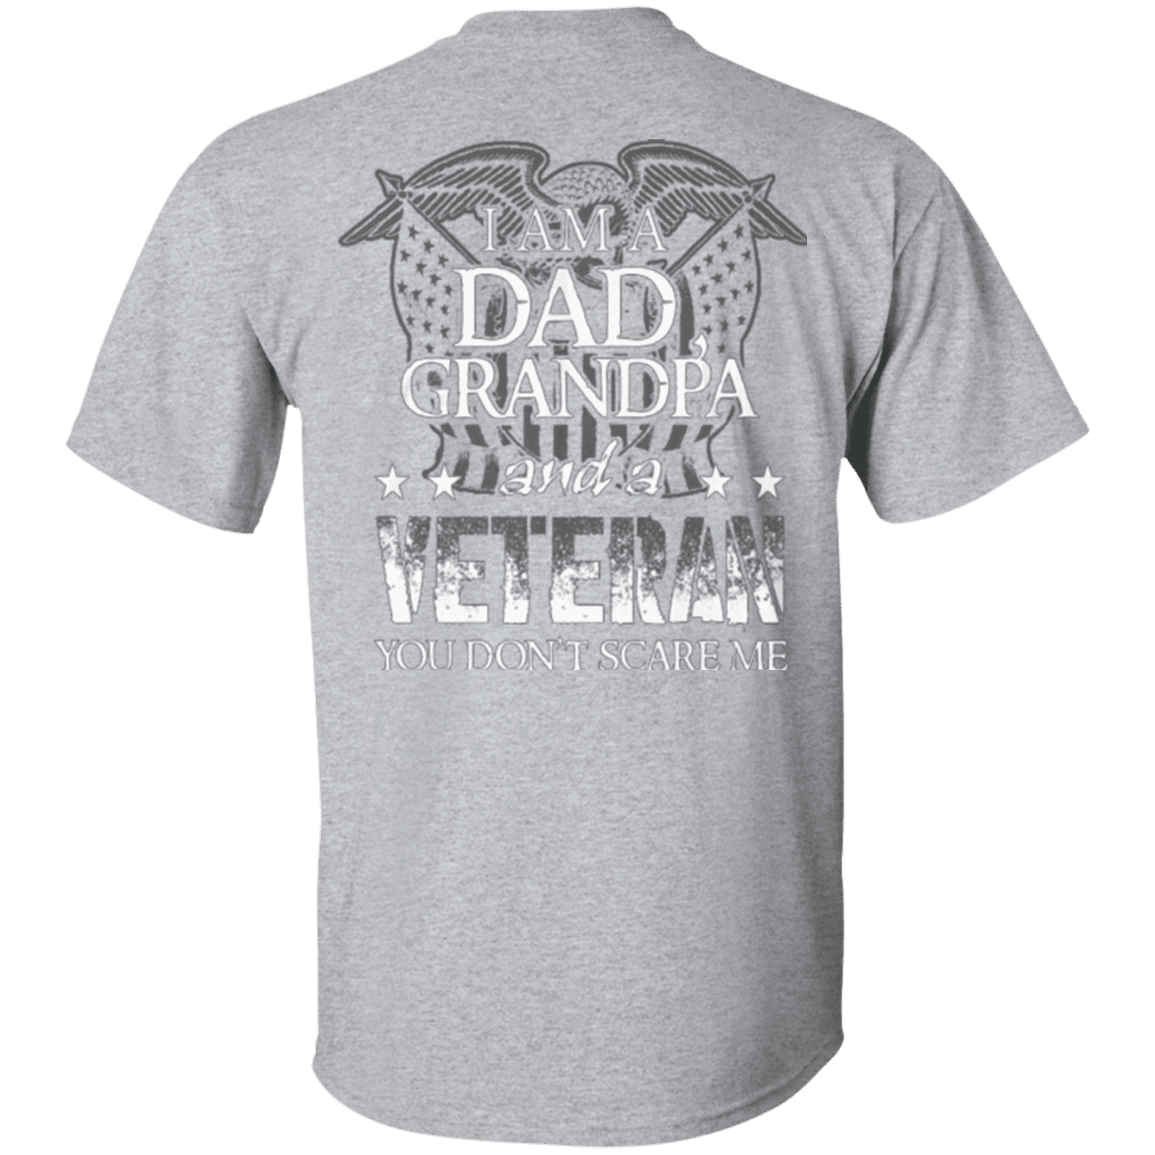 Military T-Shirt "I am Dad Grandpa And A Veteran" - Men Back-TShirt-General-Veterans Nation